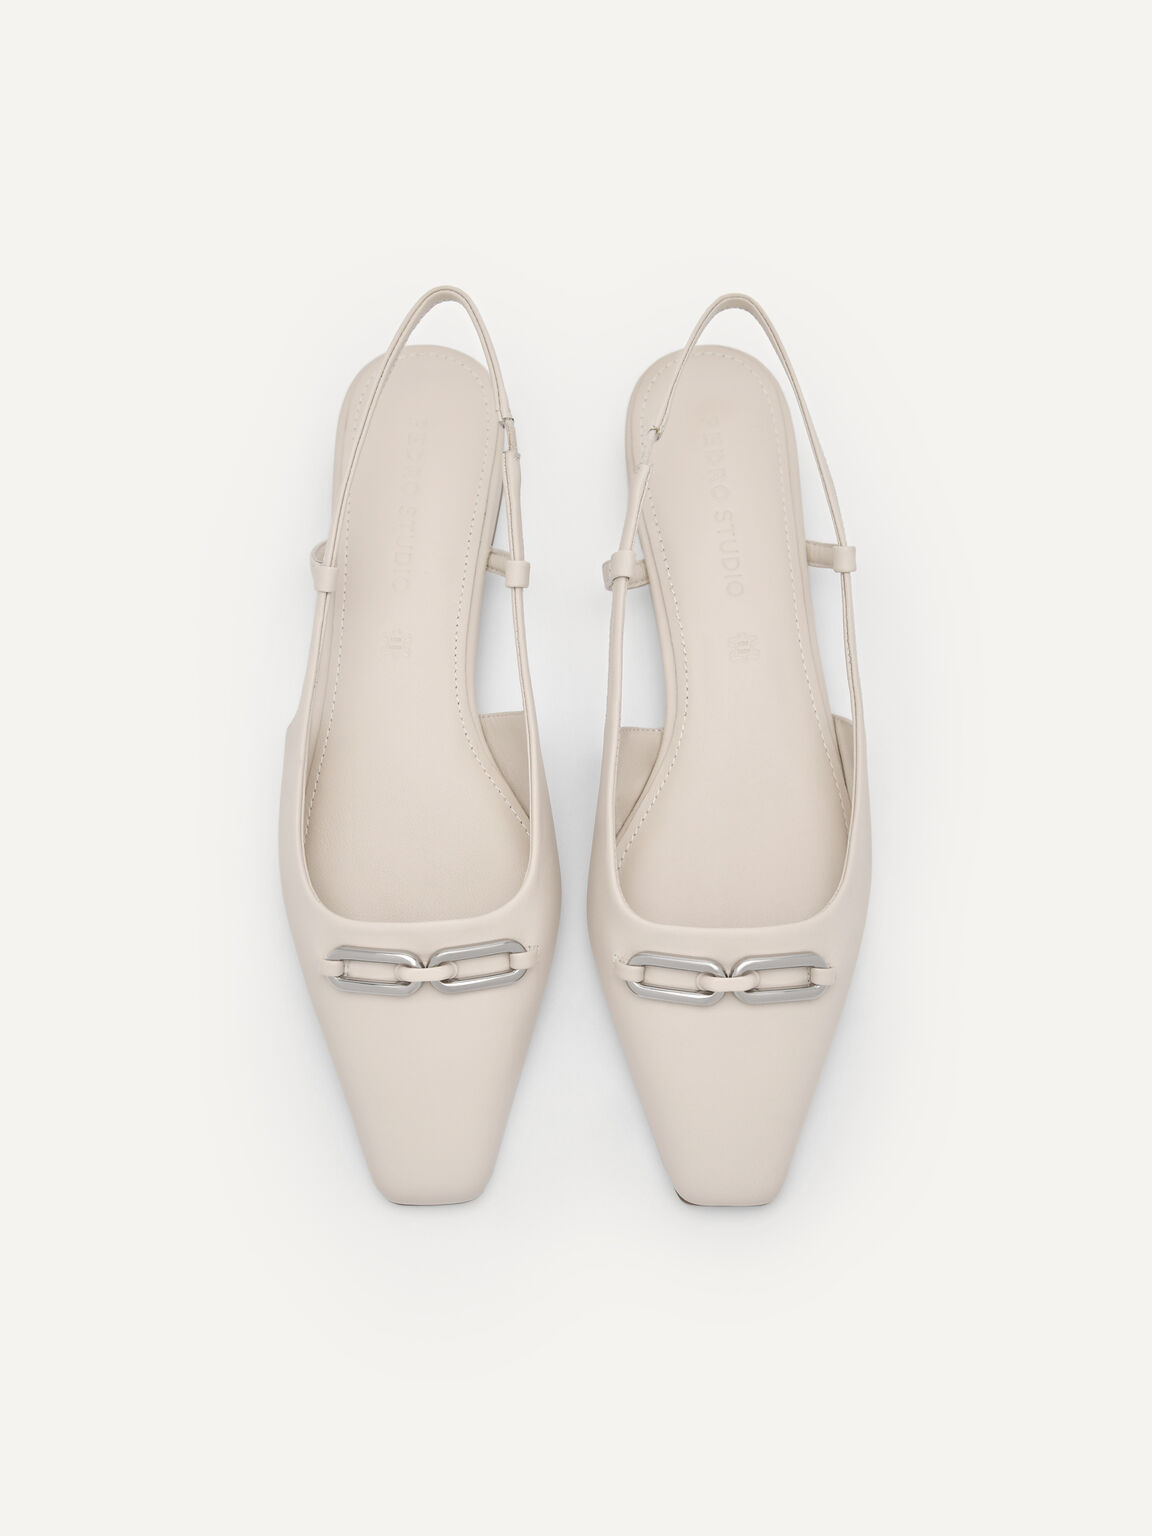 PEDRO Studio Kate Leather Ballerina Flats, Cream, hi-res